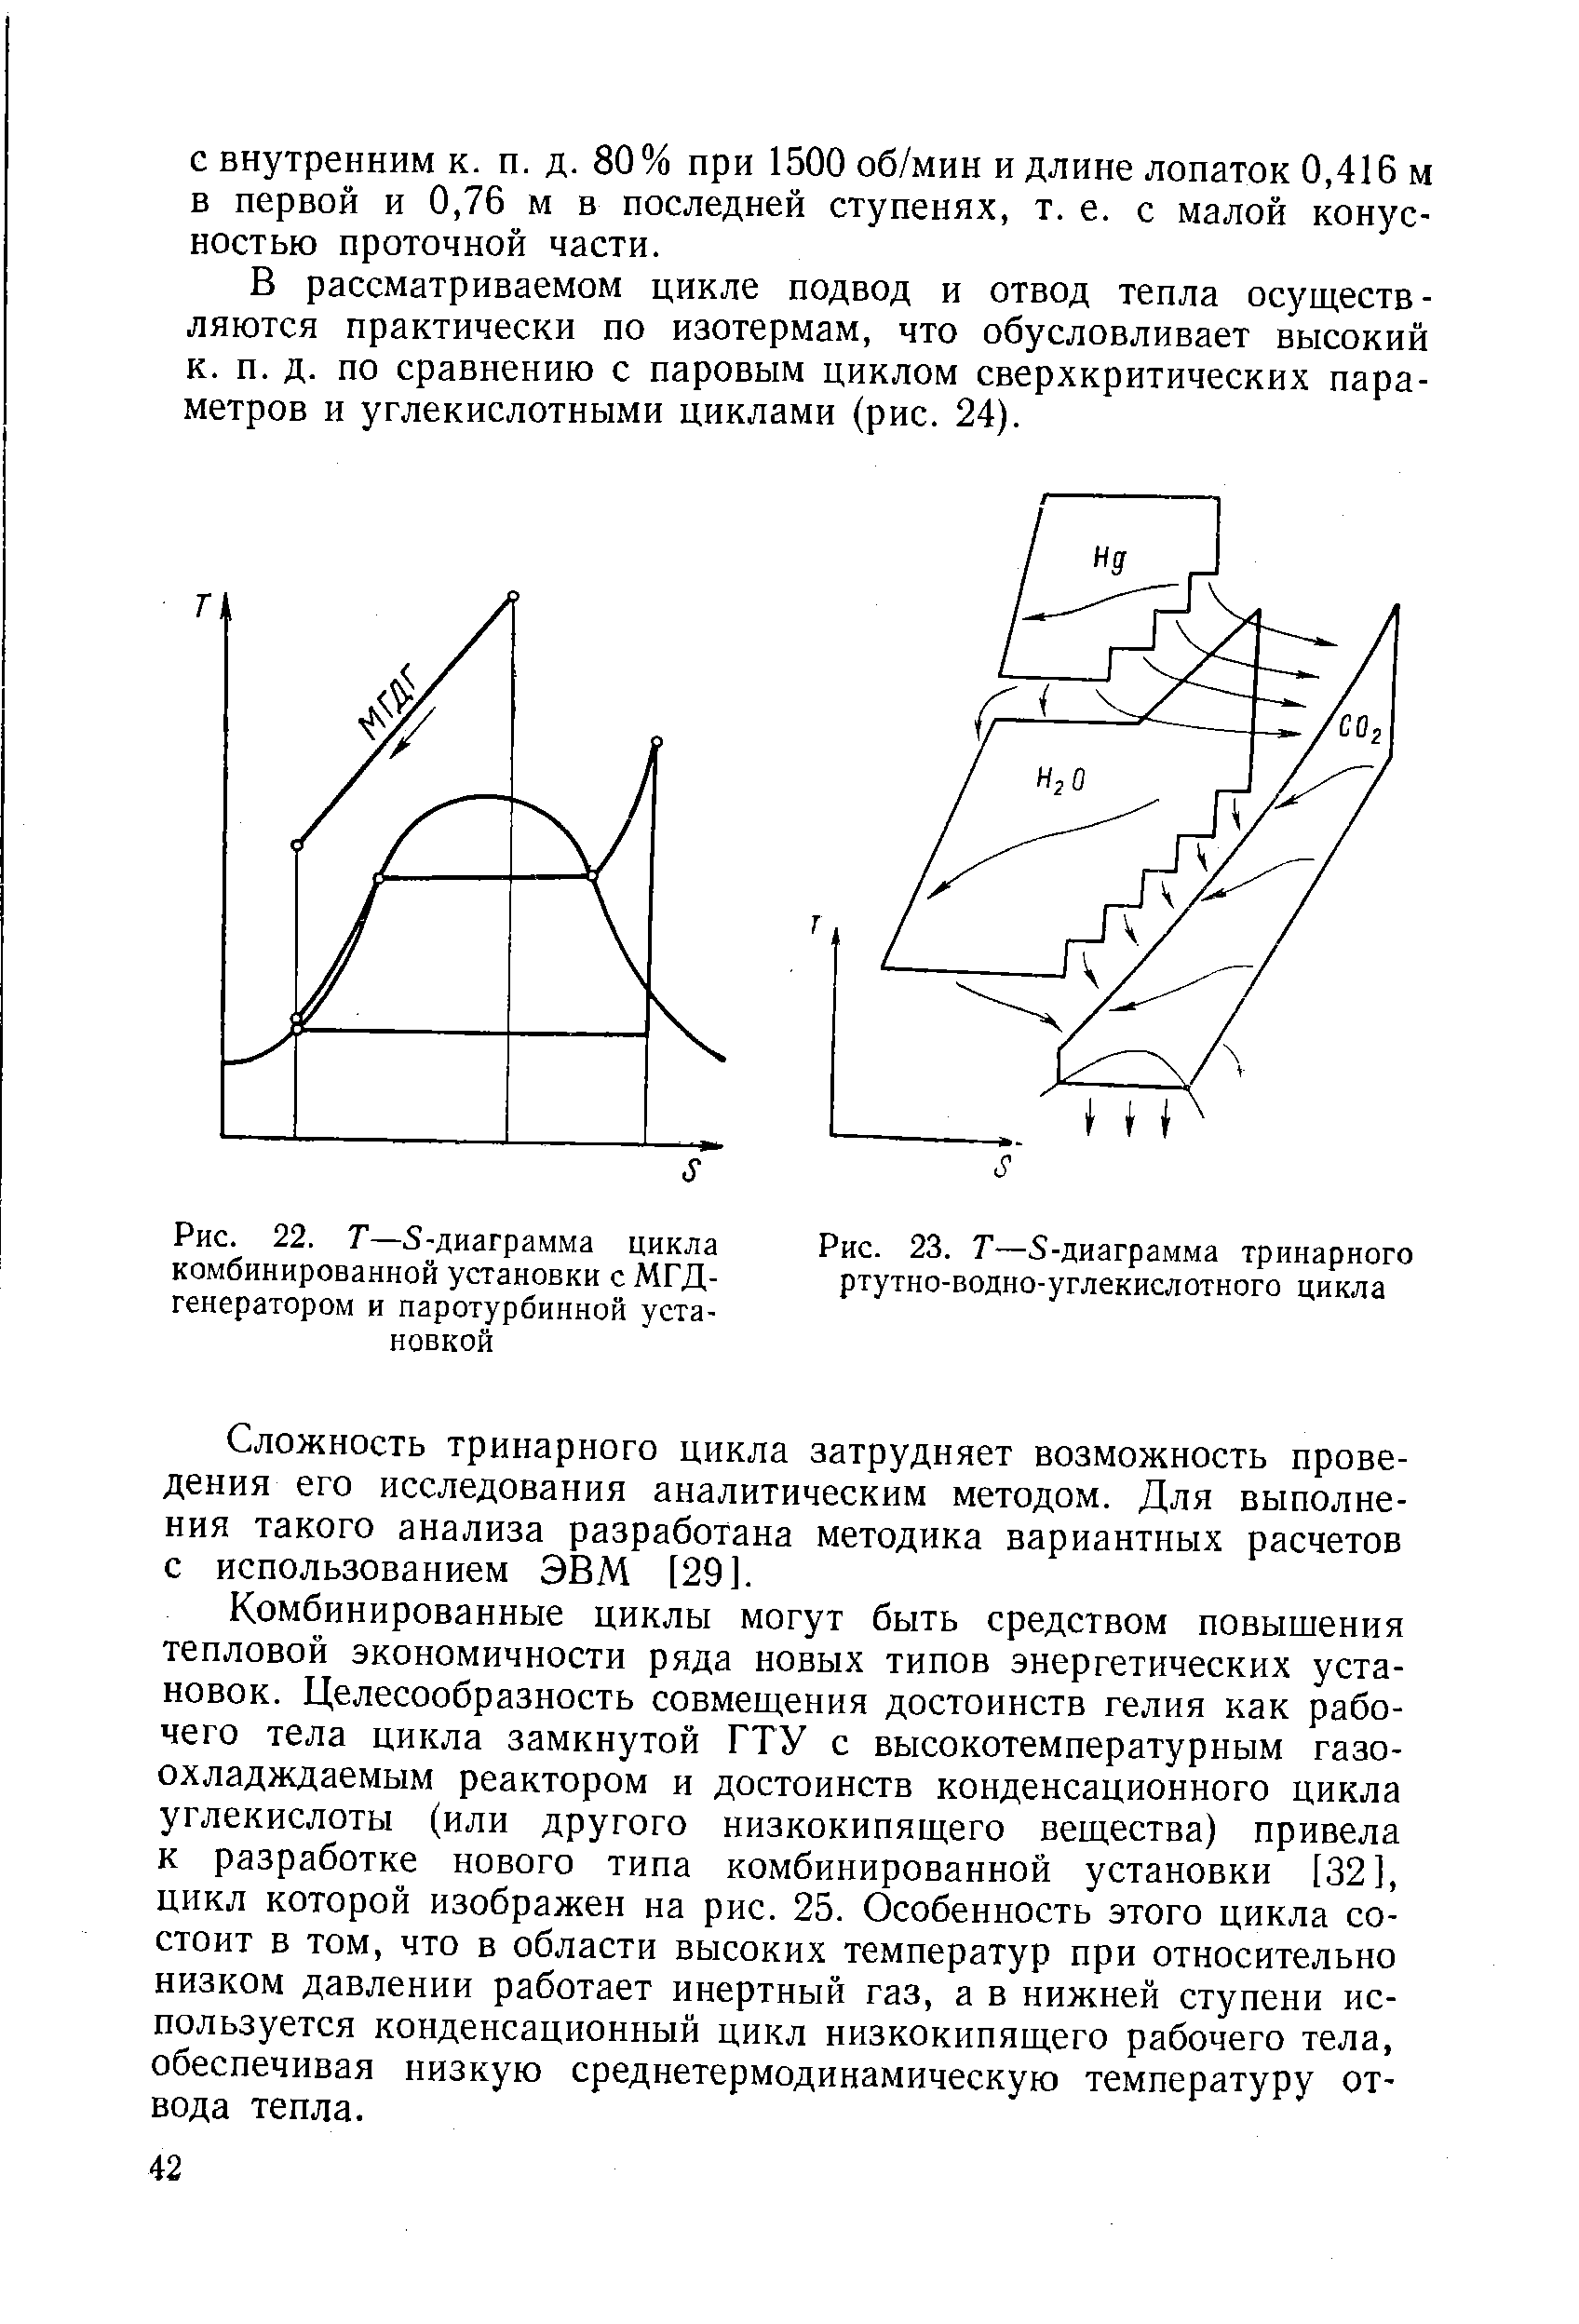 Рис. 23. Т—S-диаграмма тринарного ртутно-водно-углекислотного цикла
